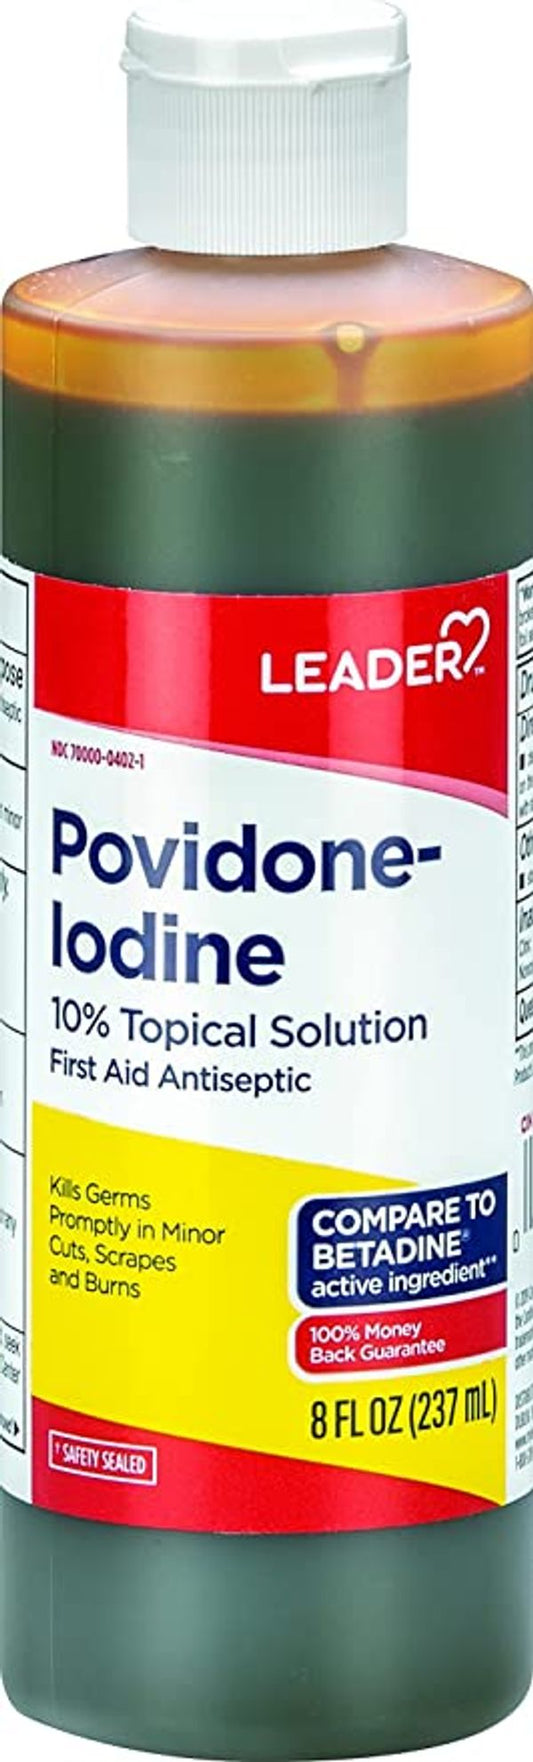 Leader Povidone-Iodine 10% Topical Solution 8OZ